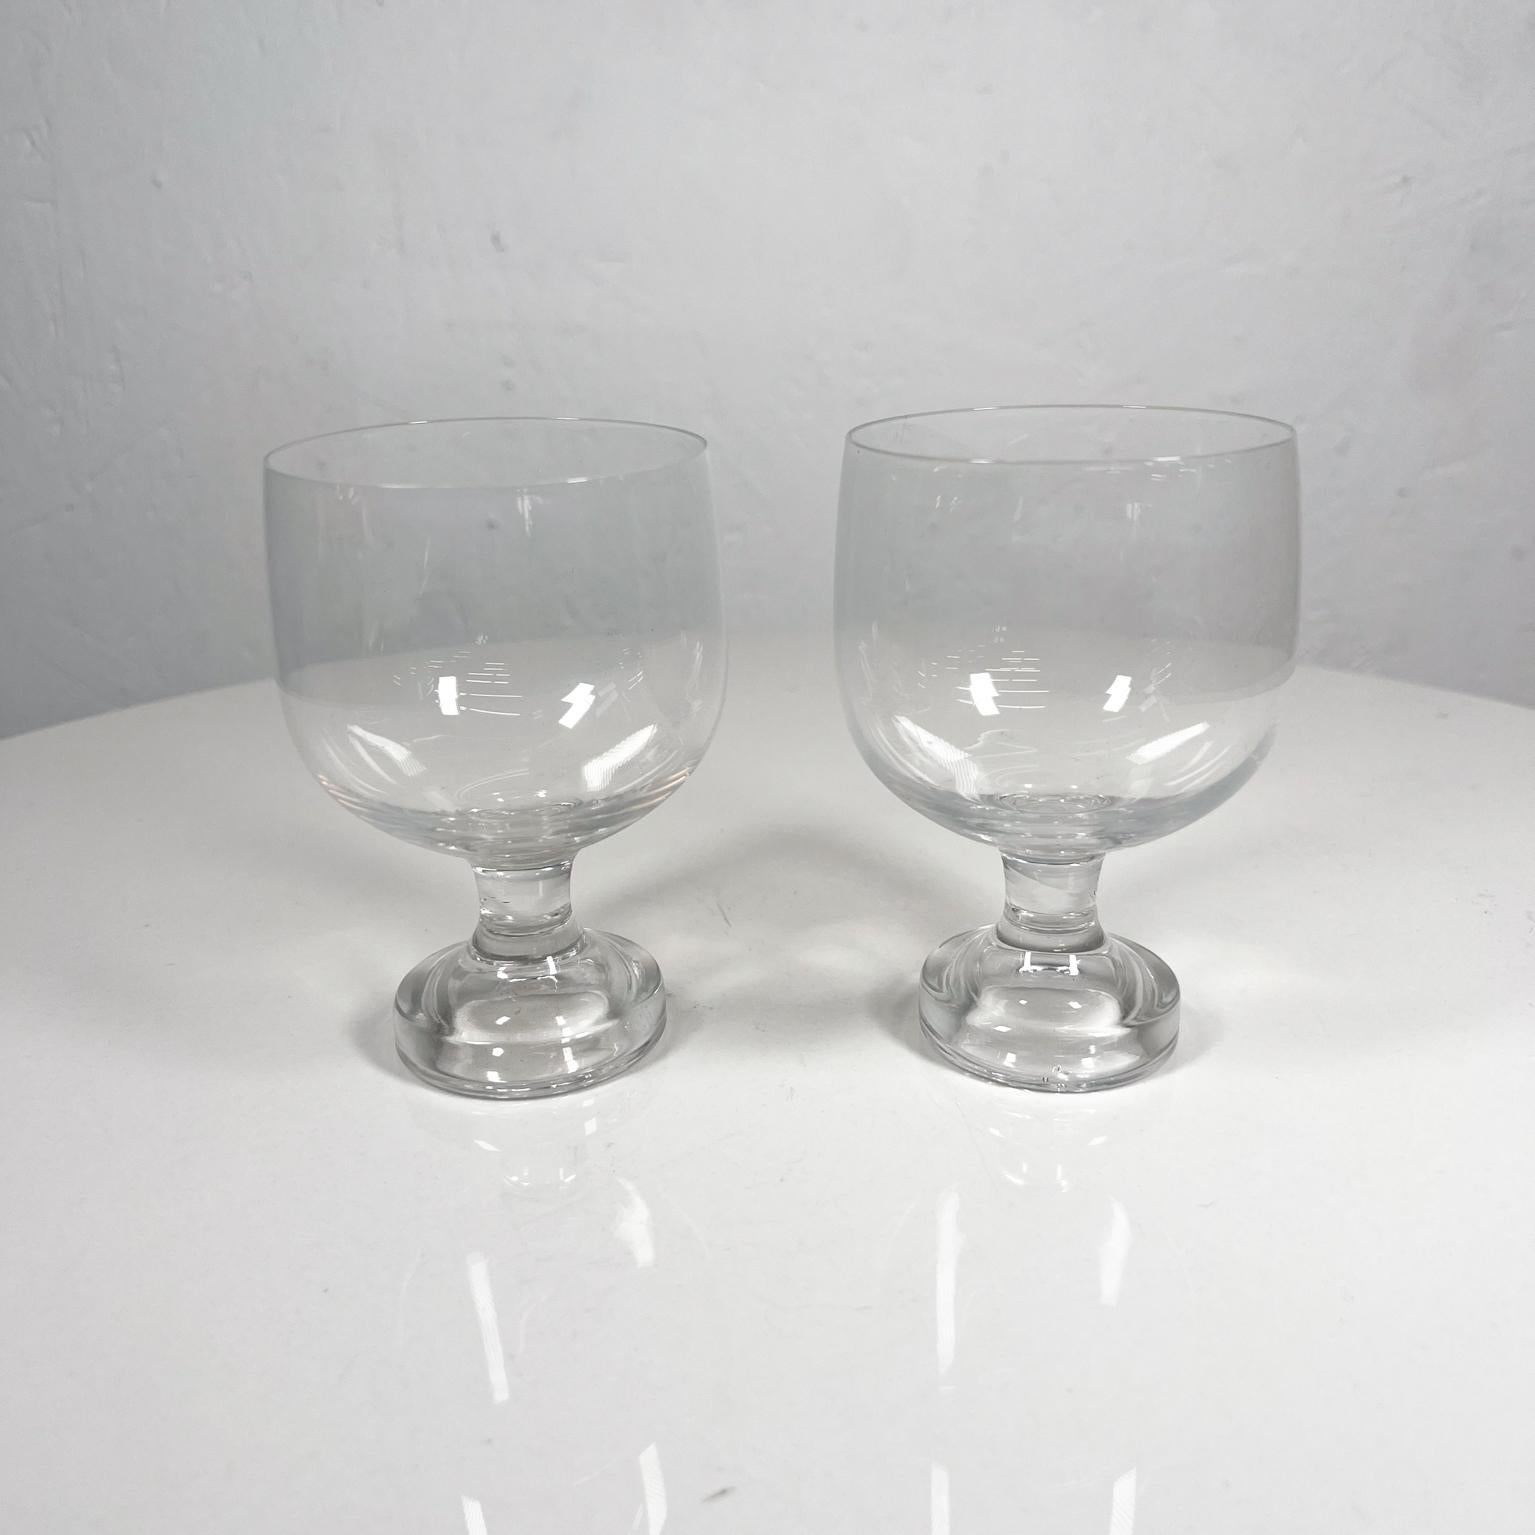 Vintage Stemware Crystal Glasses set of 2
3 diameter x 4.5 h
Original vintage condition
Review images please.